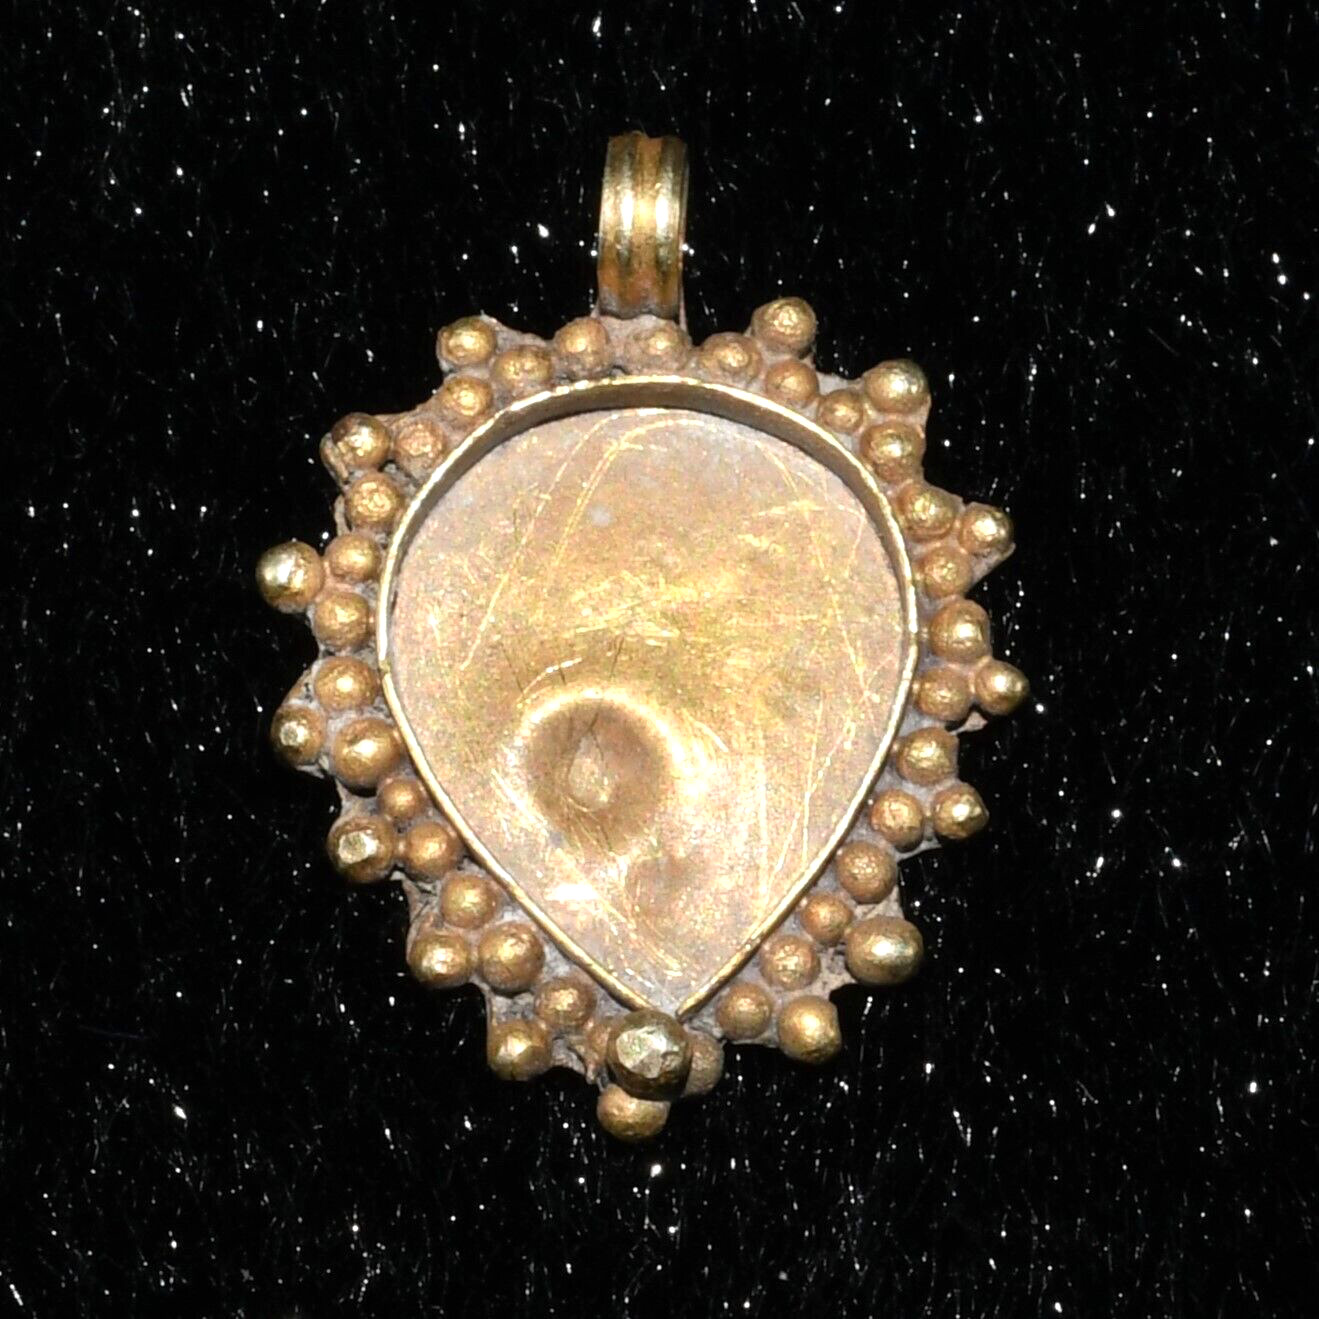 Genuine Ancient Greek Solid Gold Pendant Amulet Circa 500 - 400 BC